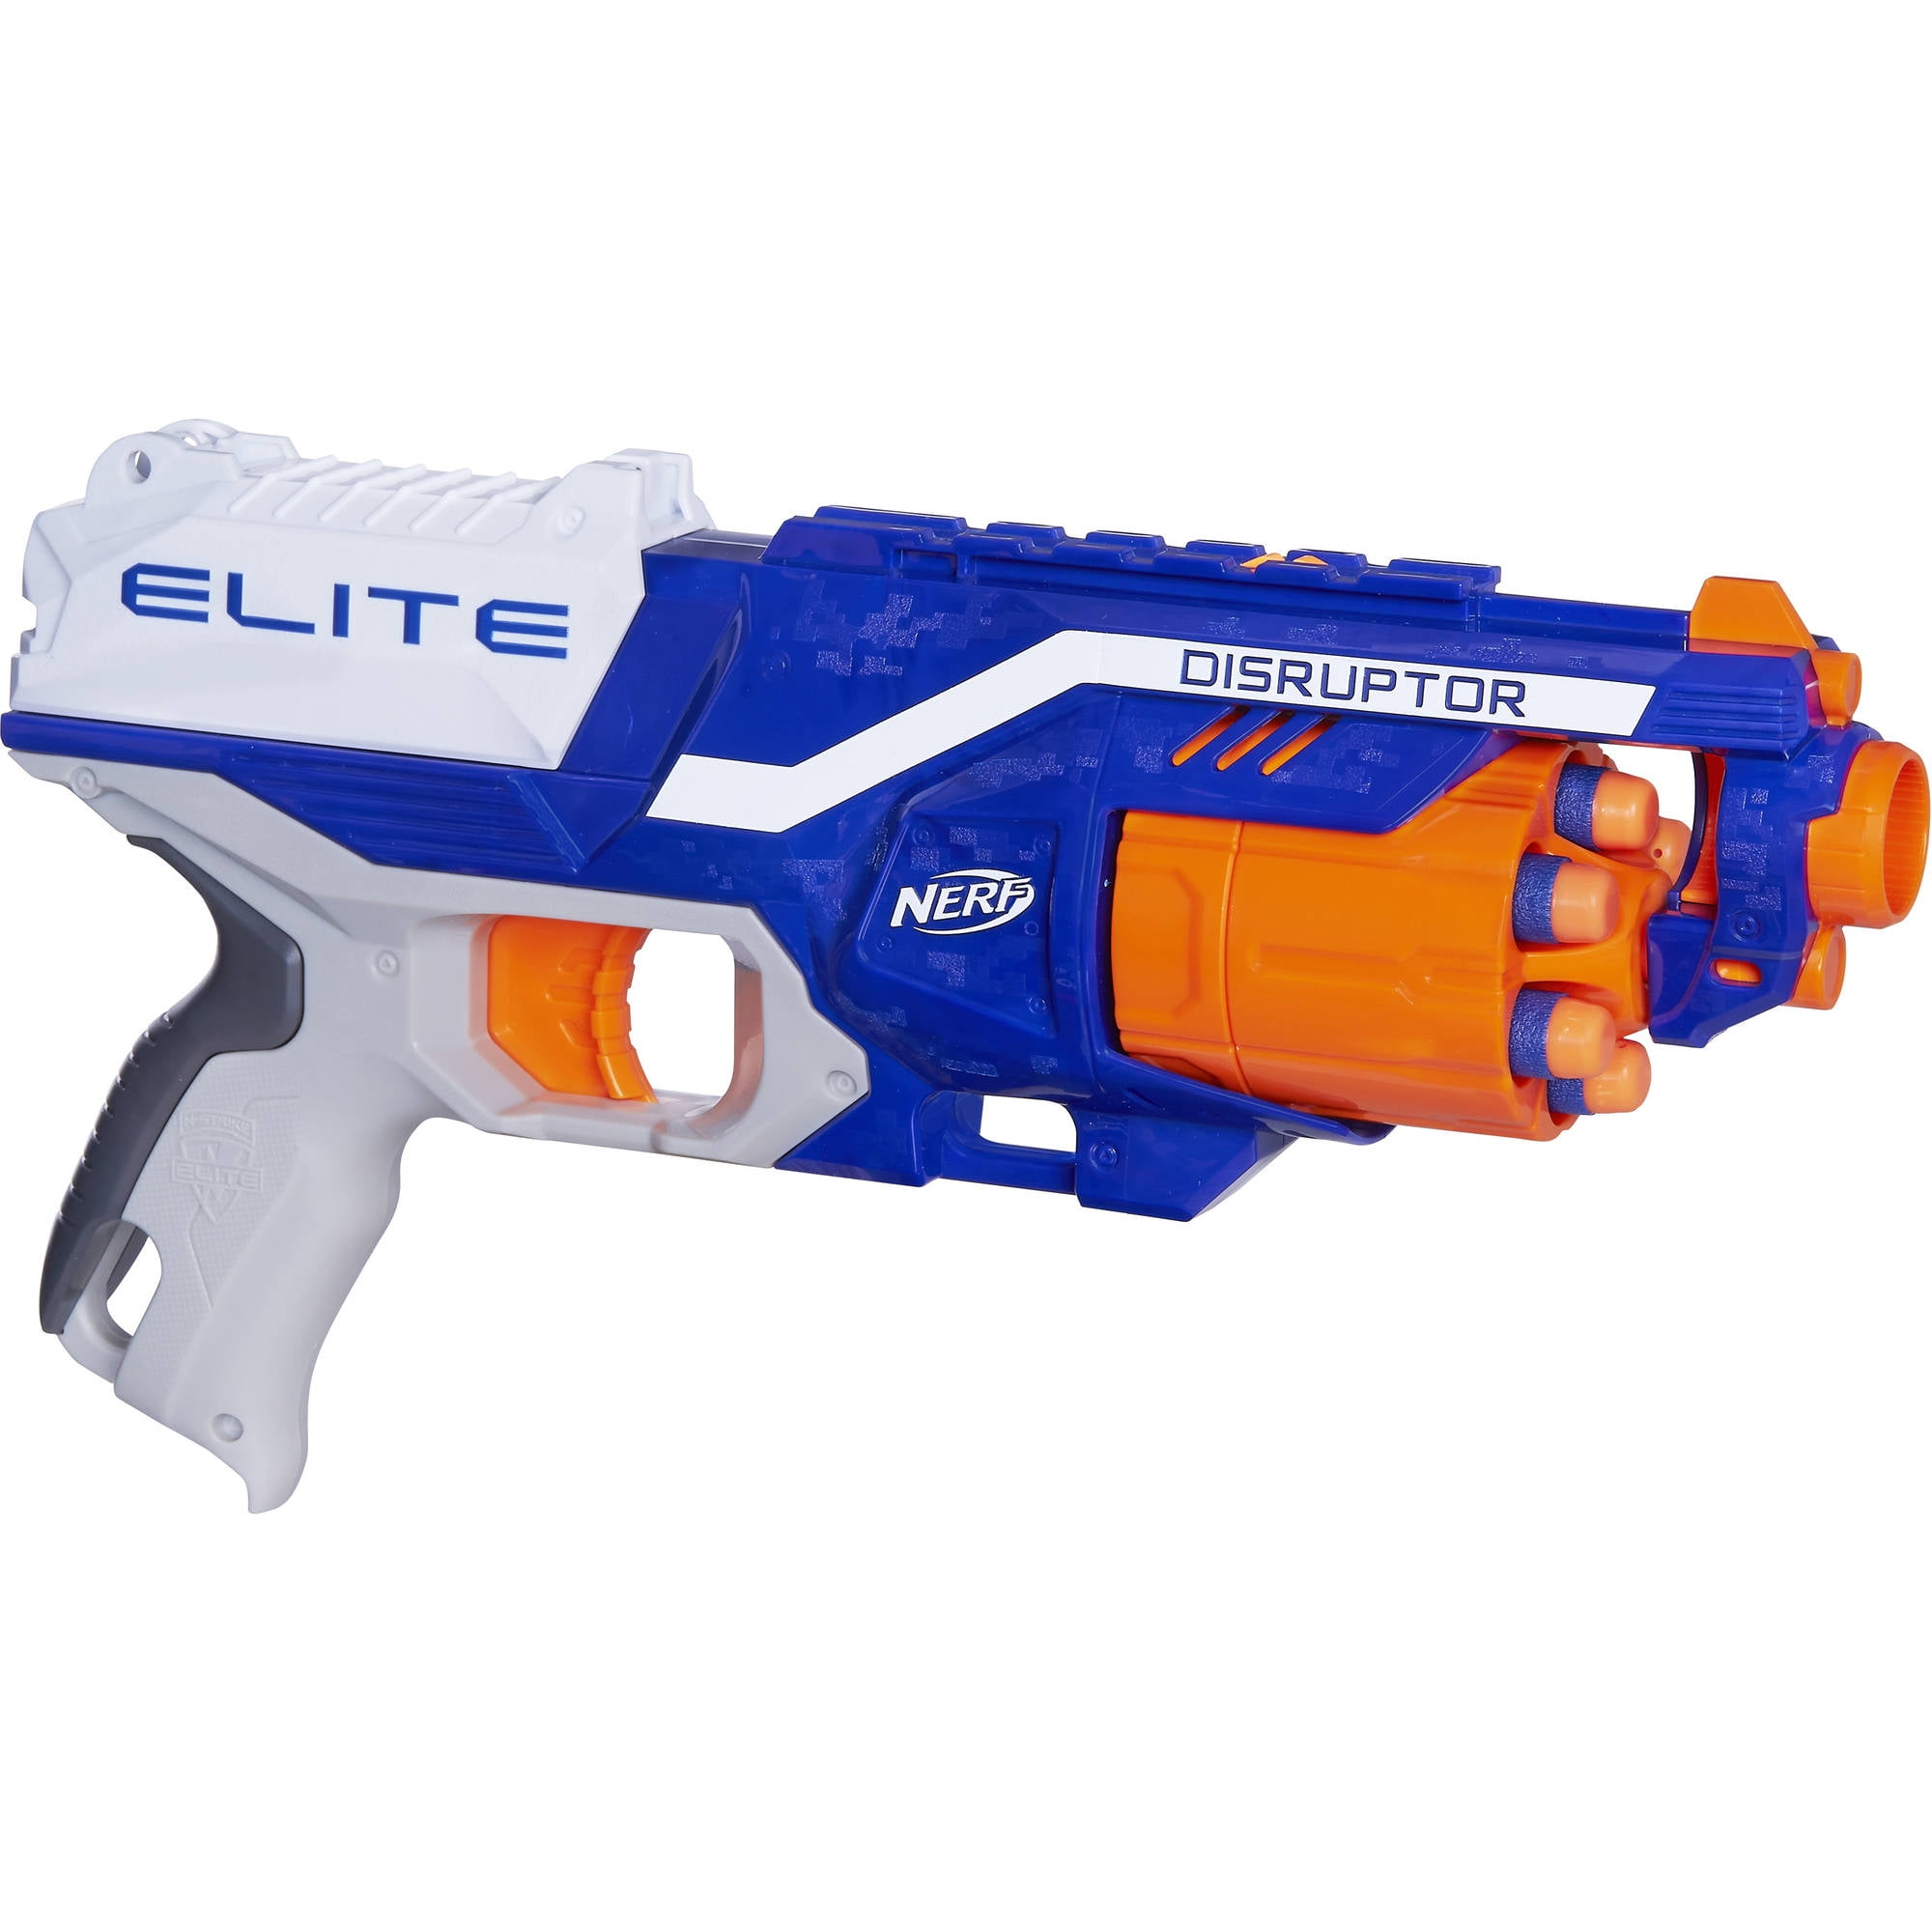 NERF N-Strike Elite Disruptor Blaster Toy B9837 for sale online 